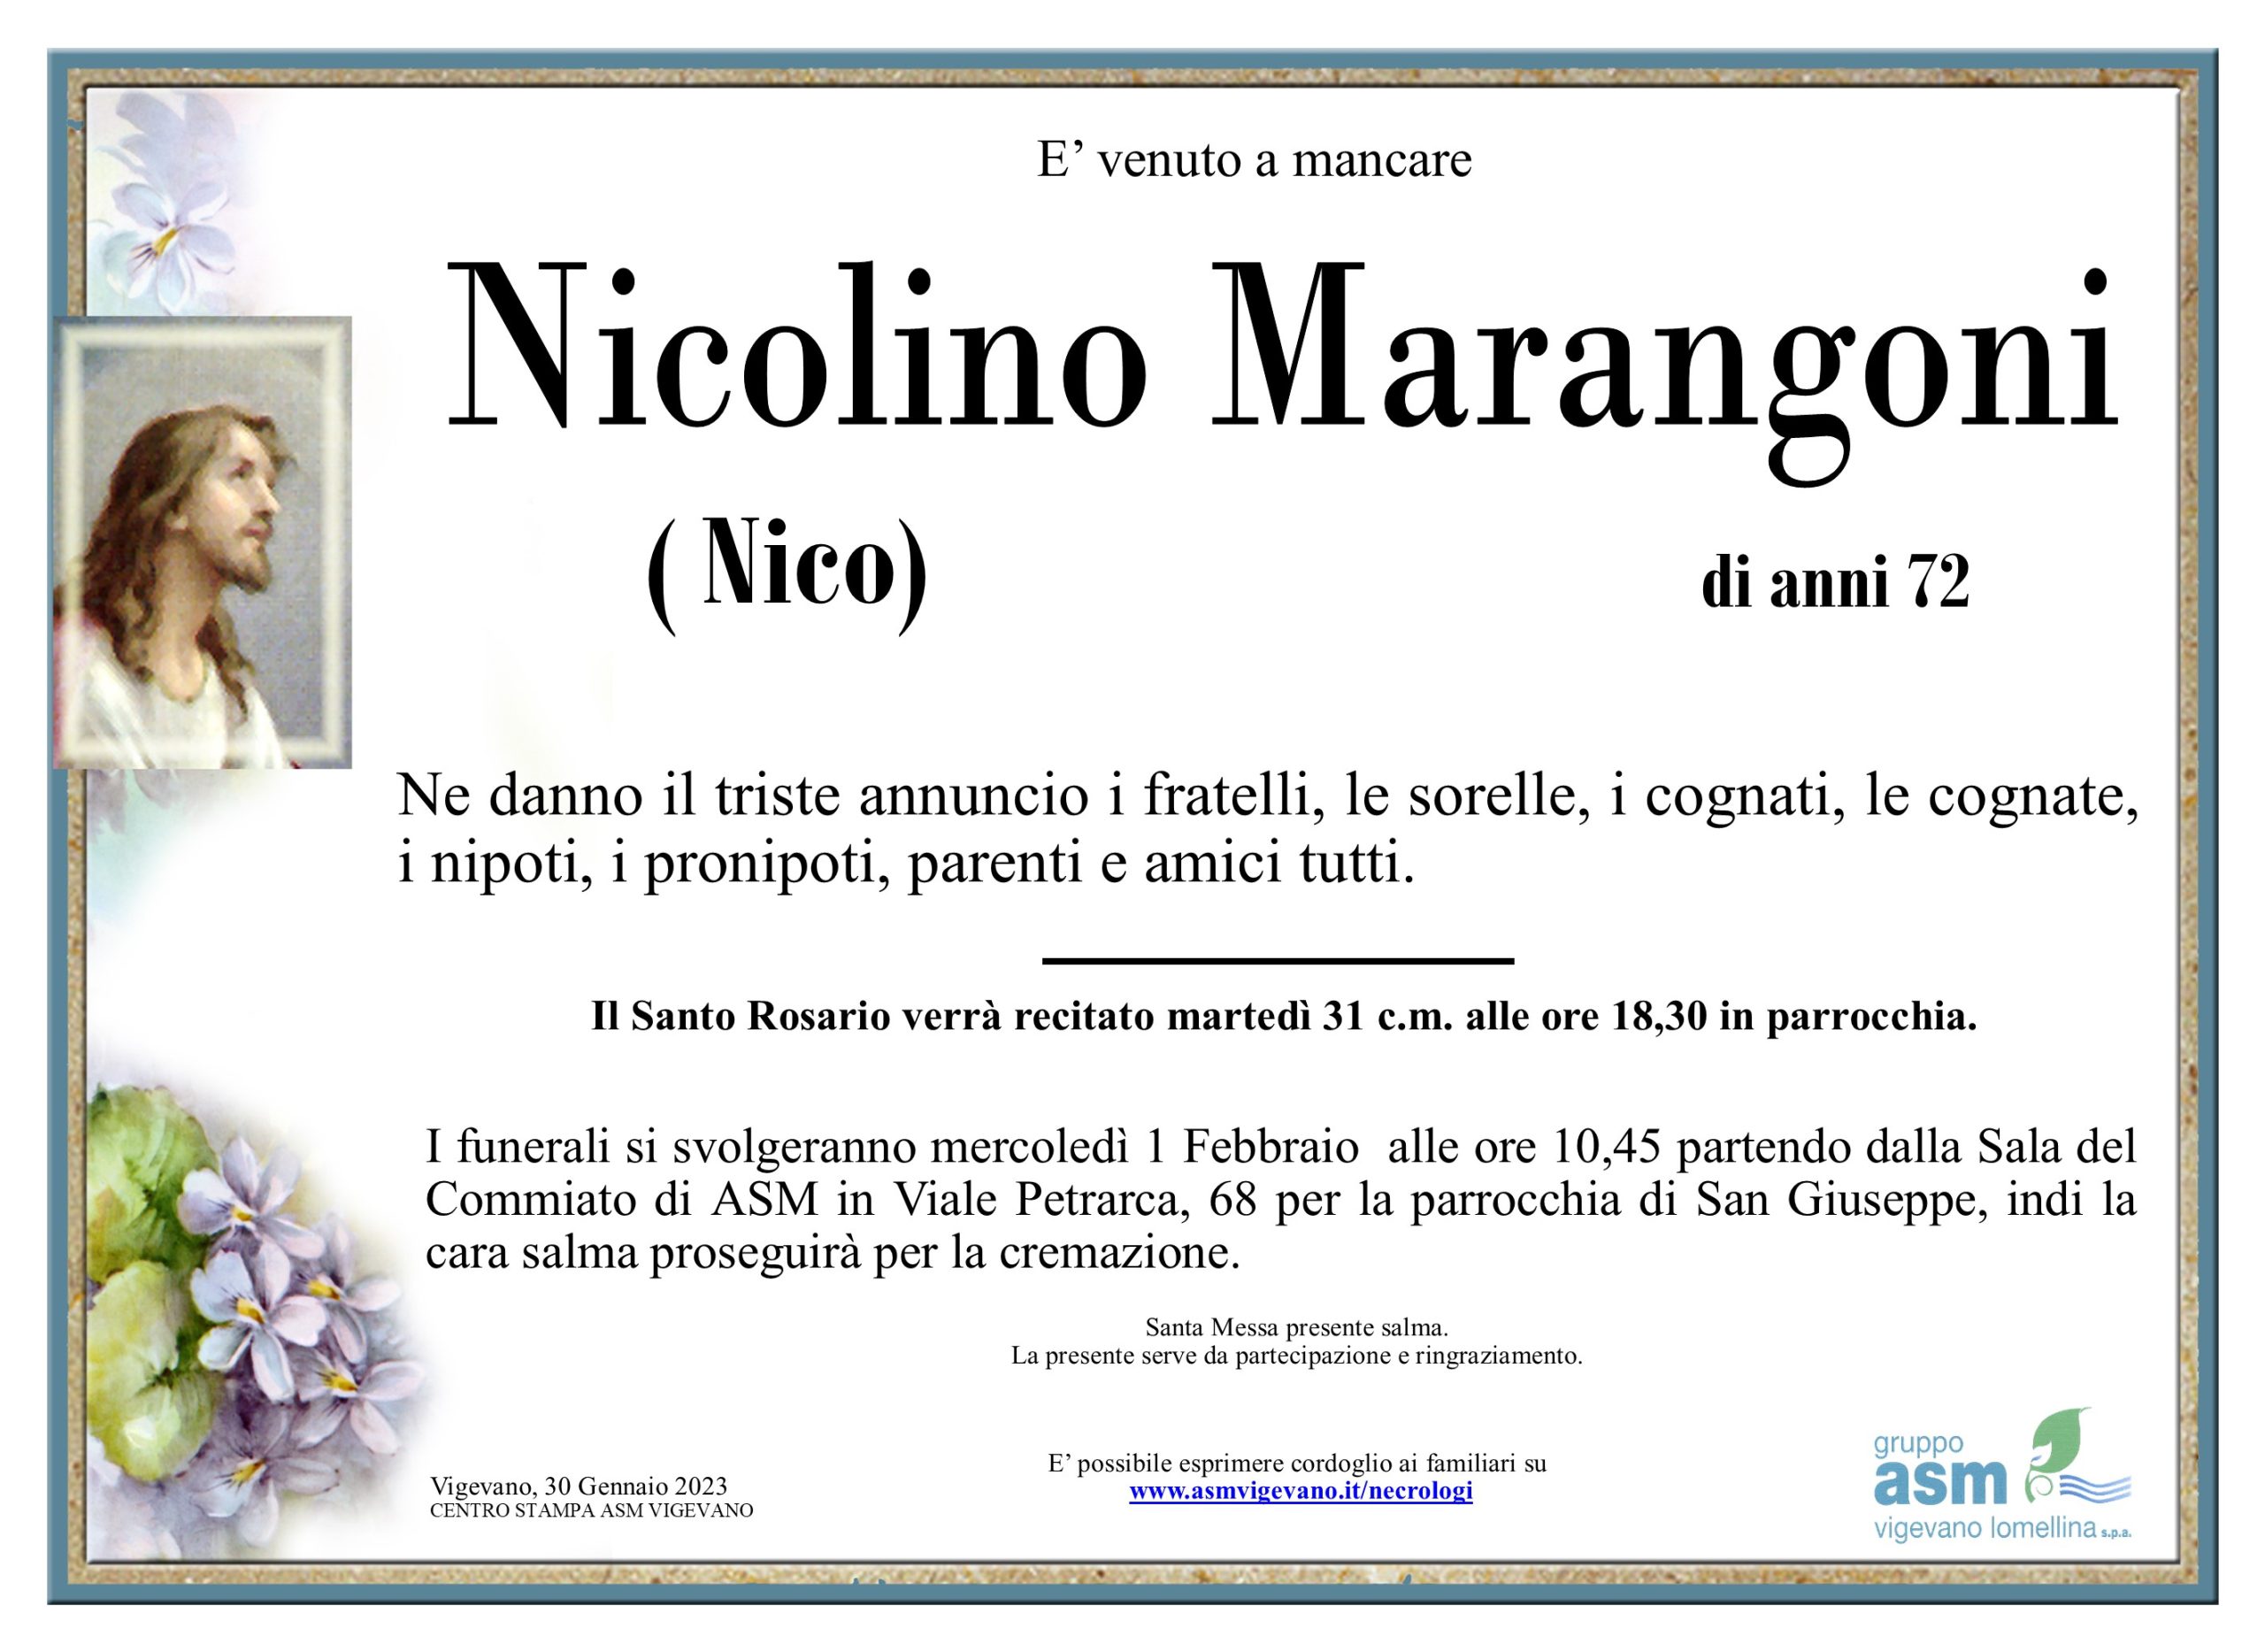 Nicolino Marangoni